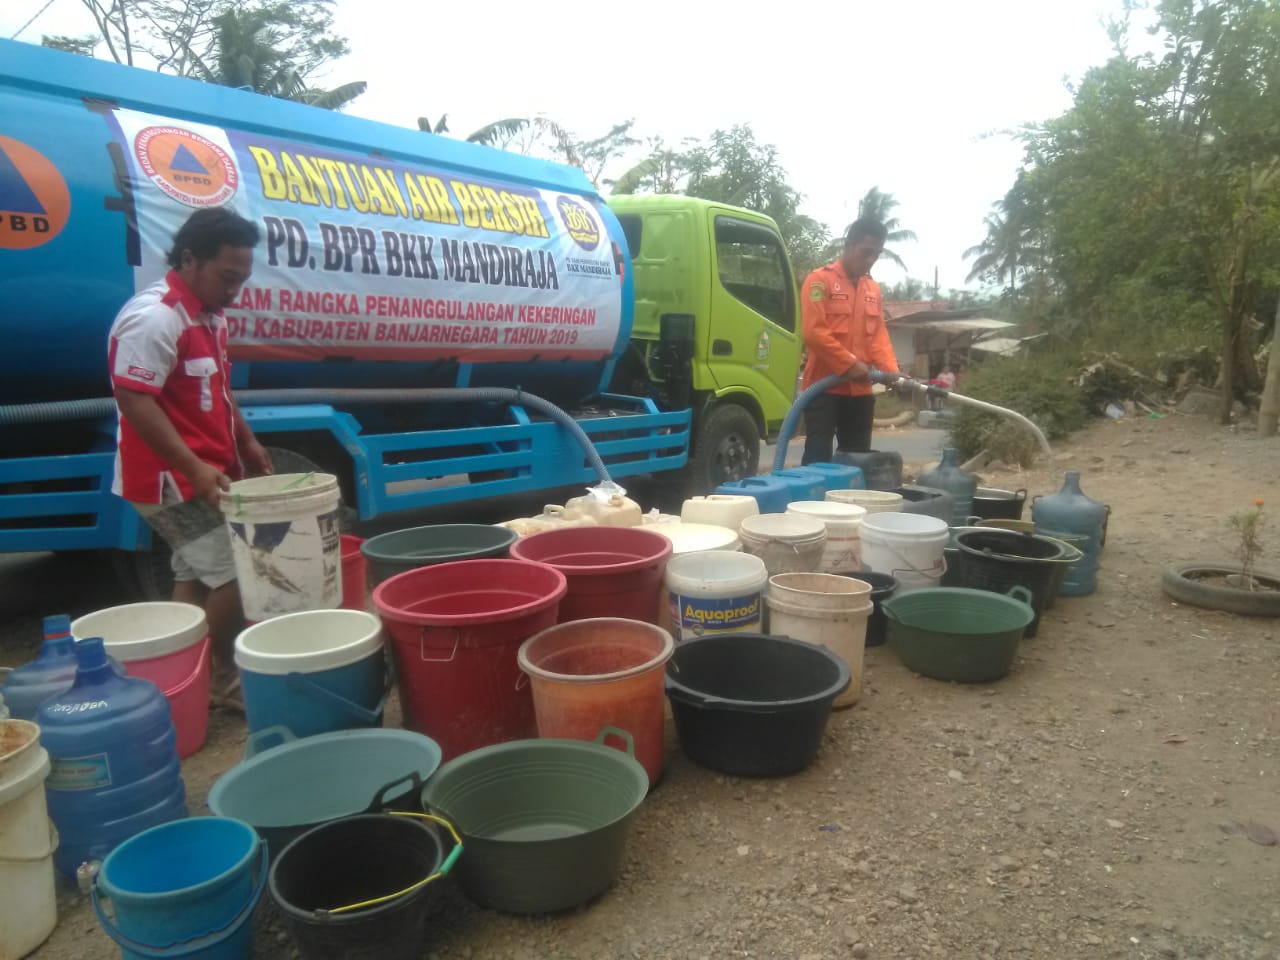 AIR BERSIH: Petugas dari BPBD Banjarnegara mengisi air bersih ke ember dan jeriken milik warga saat pengedropan bantuan air bersih, Senin (23/9). (SB/Castro)